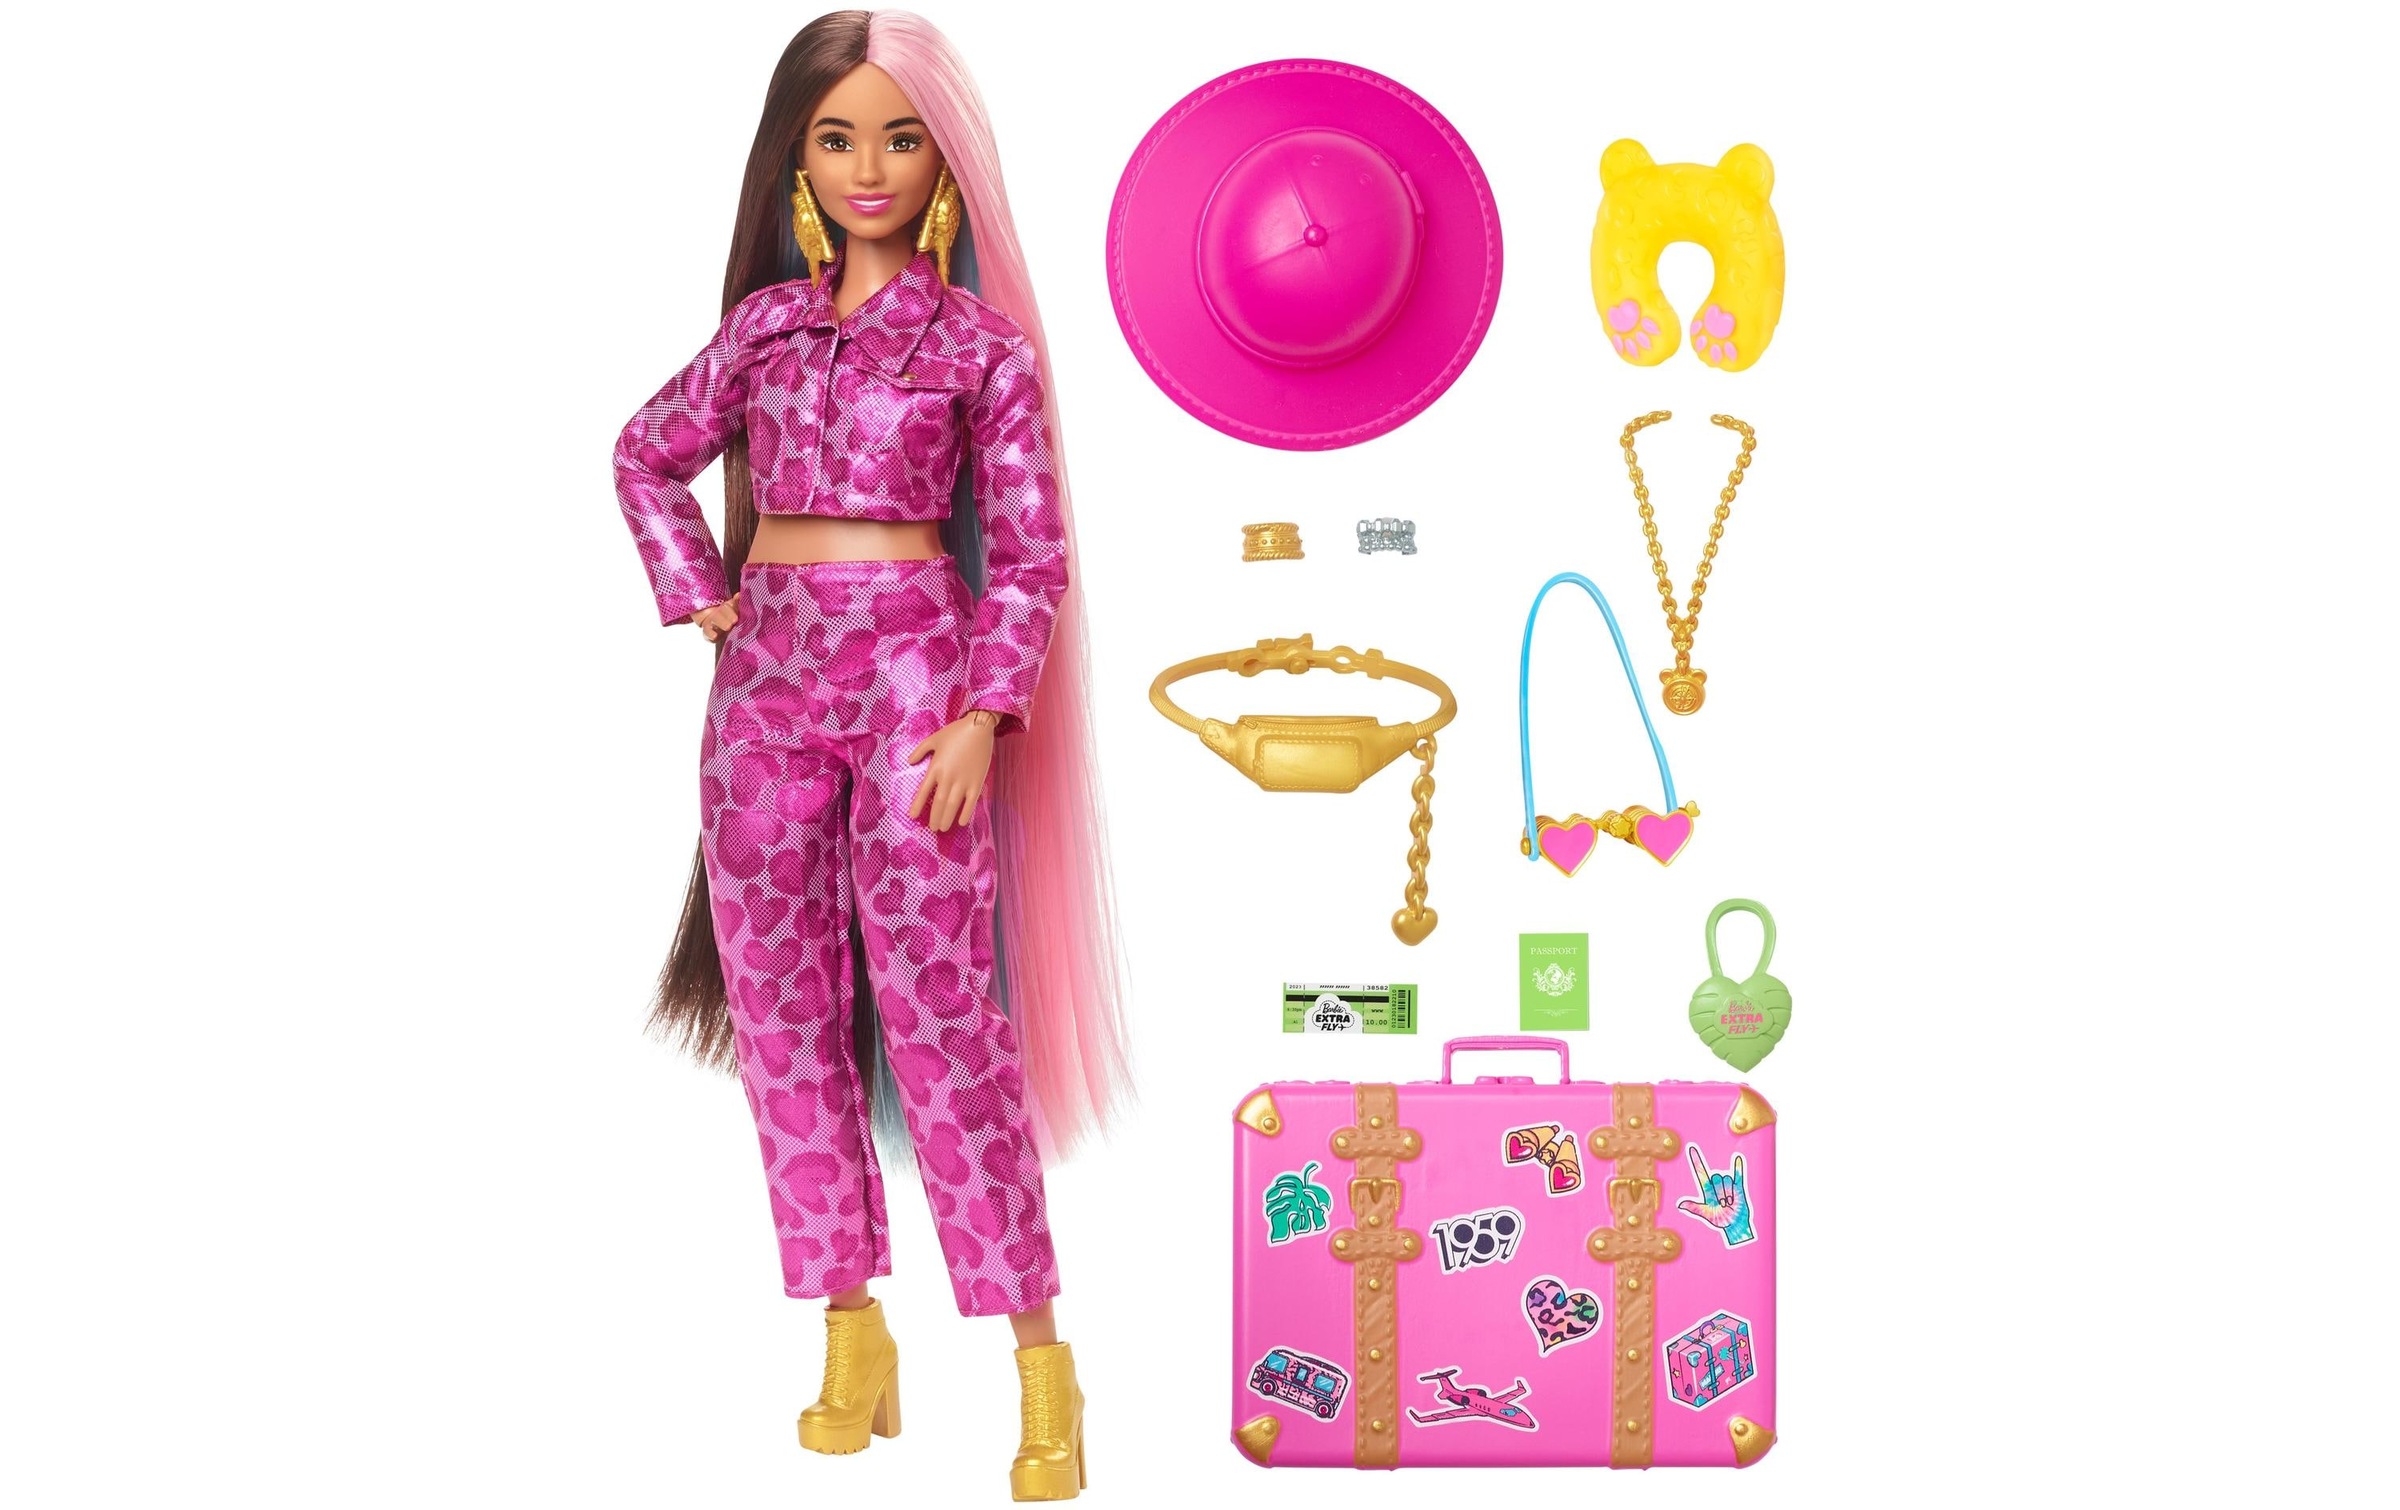 Barbie Anziehpuppe »Extra Fly Safari Pu«